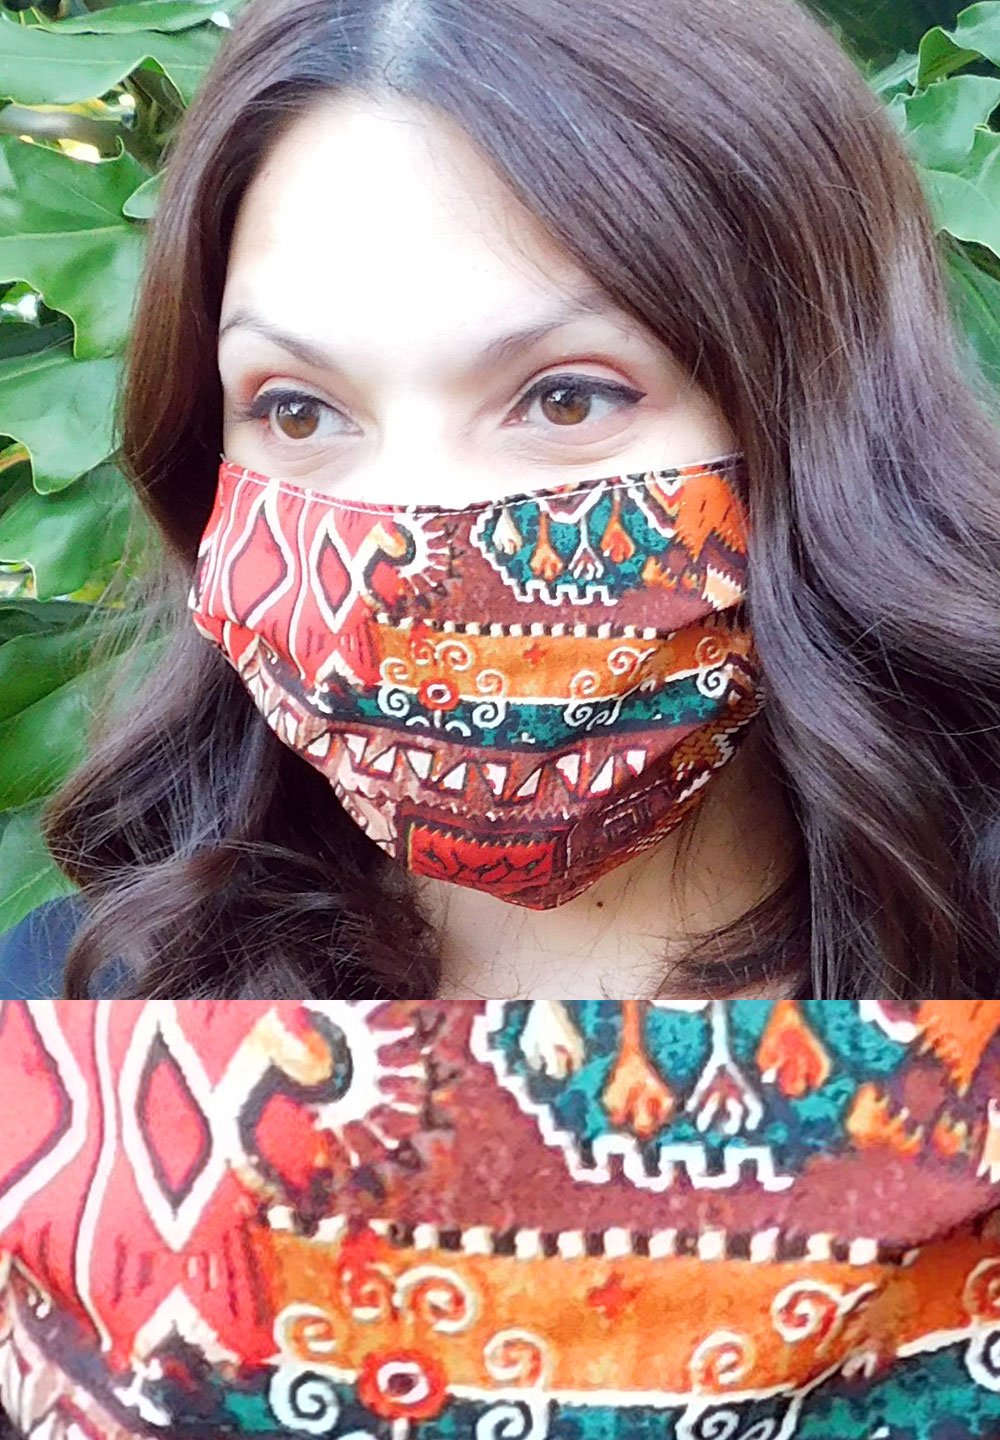 Tribal Mask